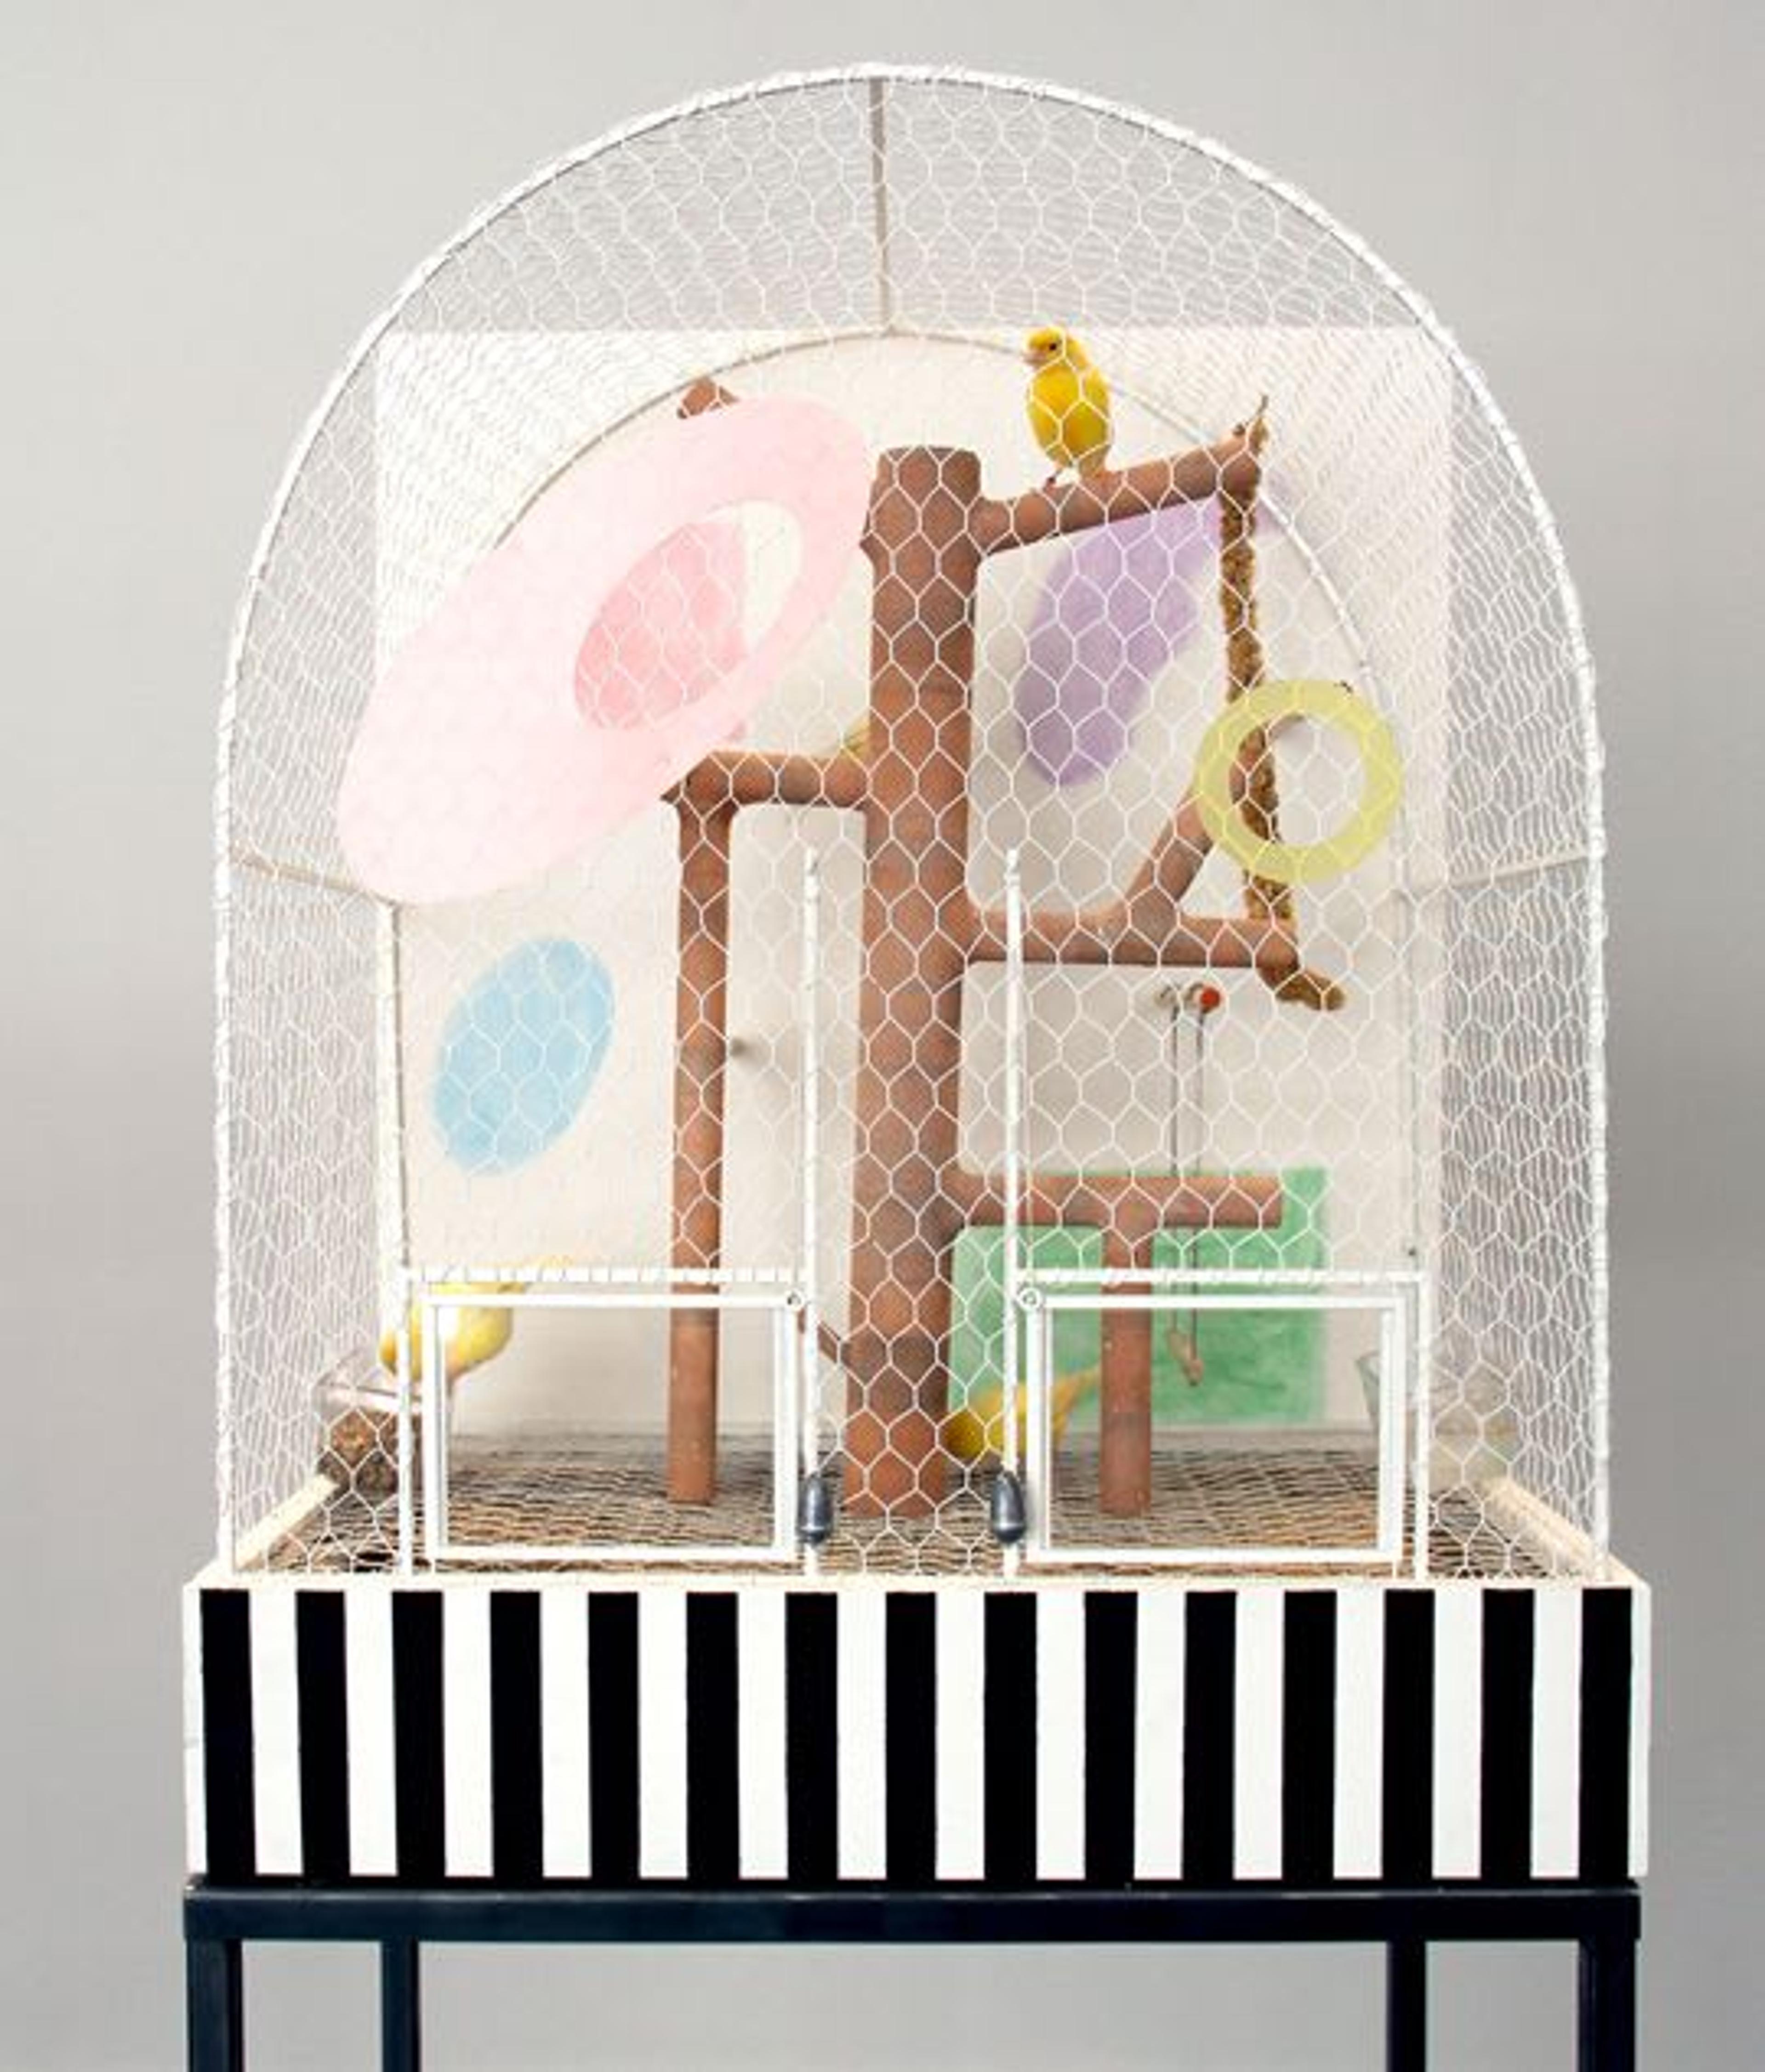 Bird cage for canaries designed by Andrea Branzi at Galleria Luisa Delle Piane.